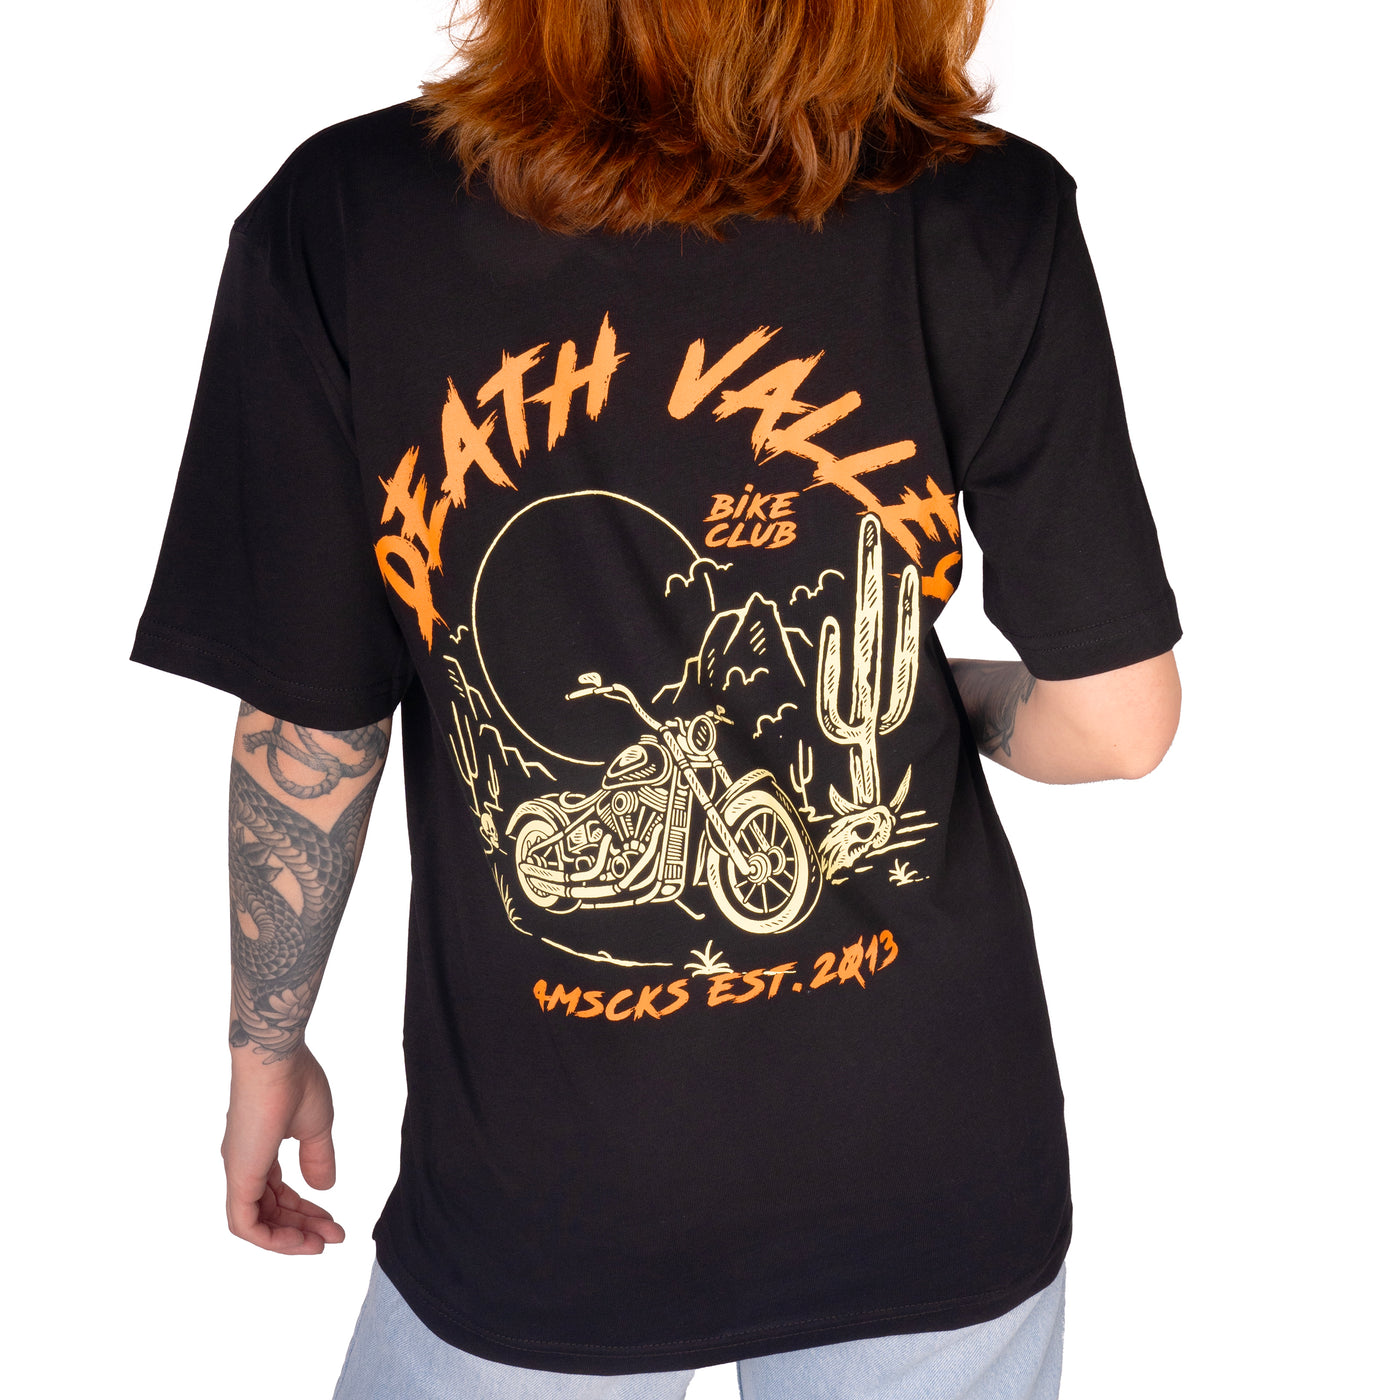 Death Valley - Camiseta